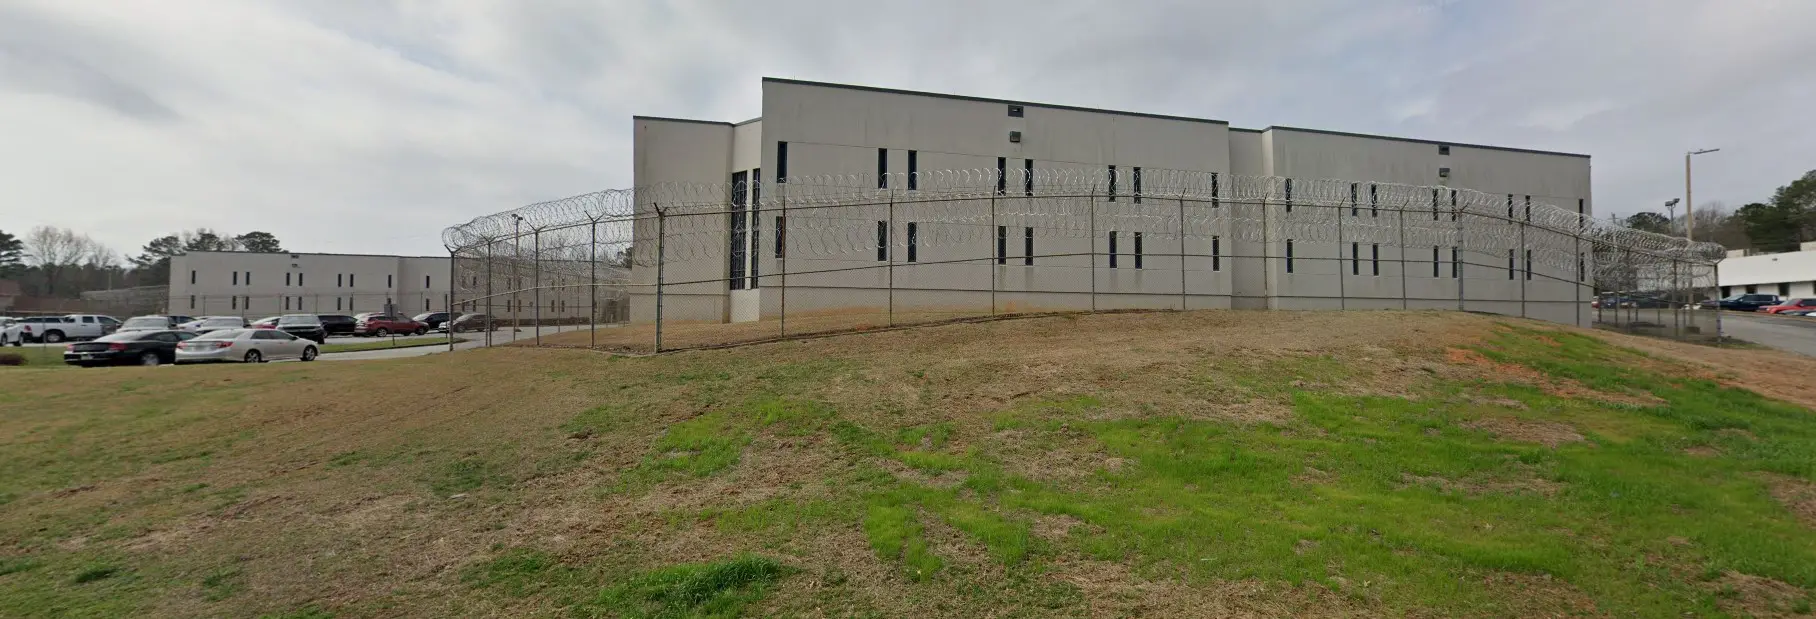 Photos Coweta County Jail 3